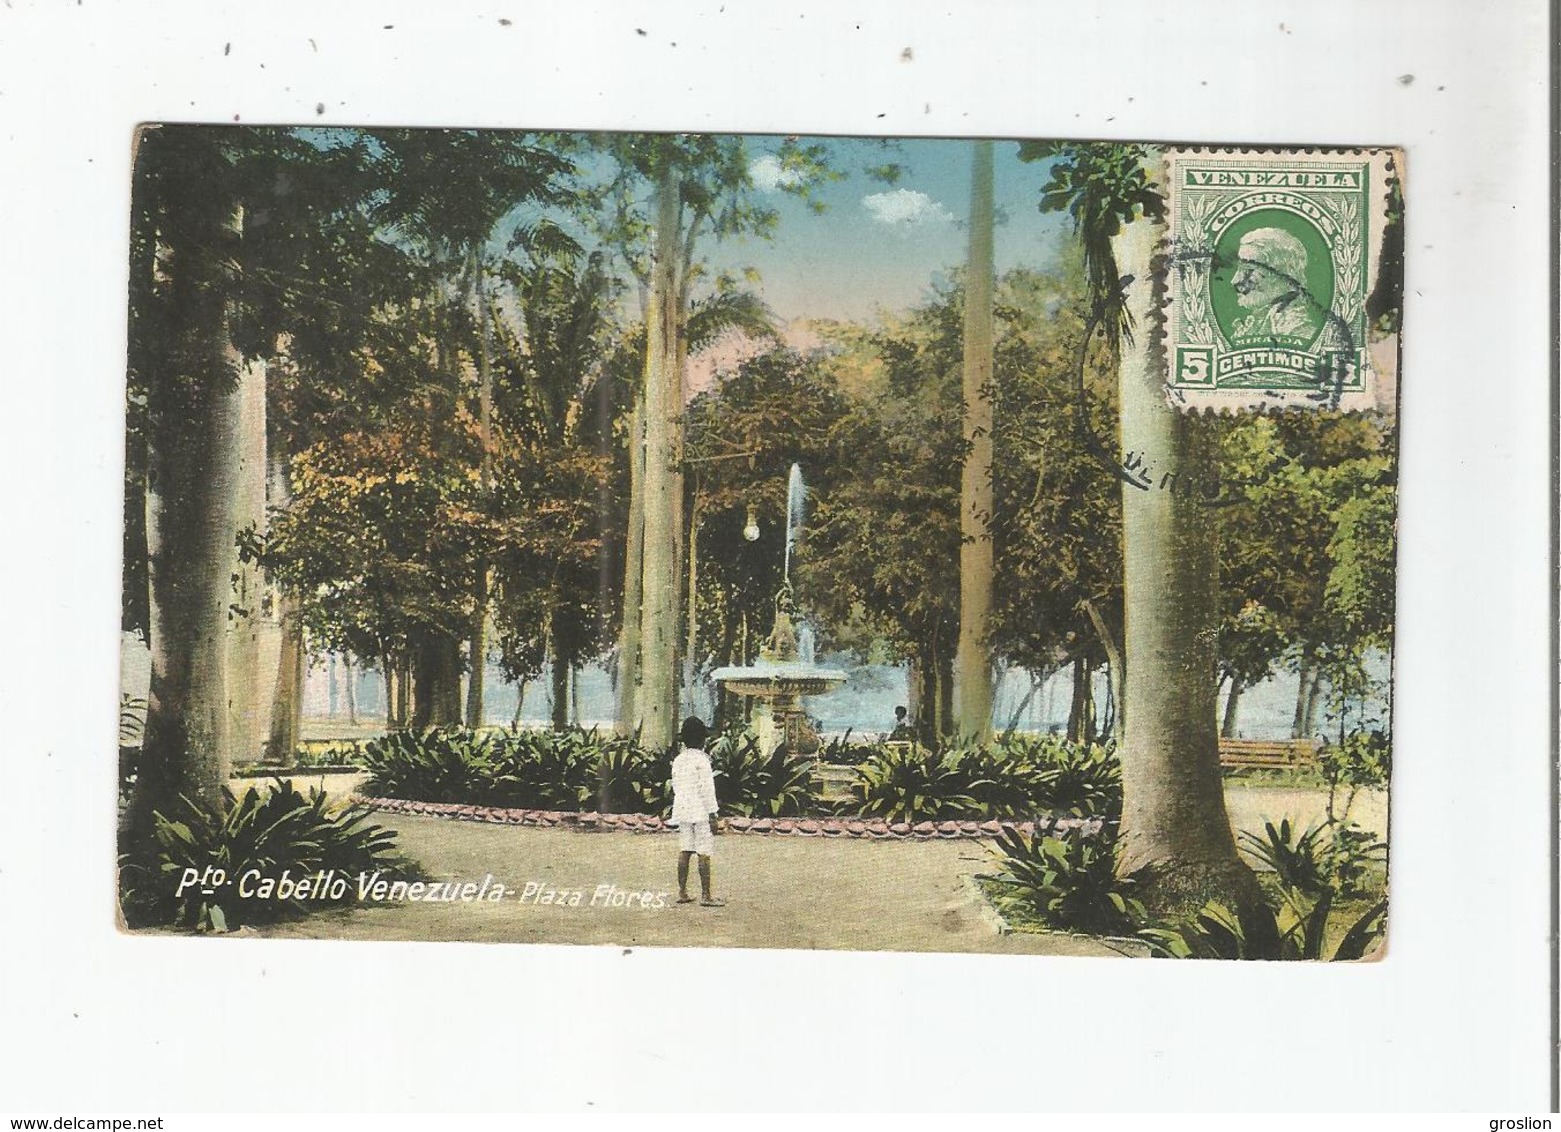 PUERTO CABELLO (VENEZUELA) PLAZA FLORES 1913 - Venezuela